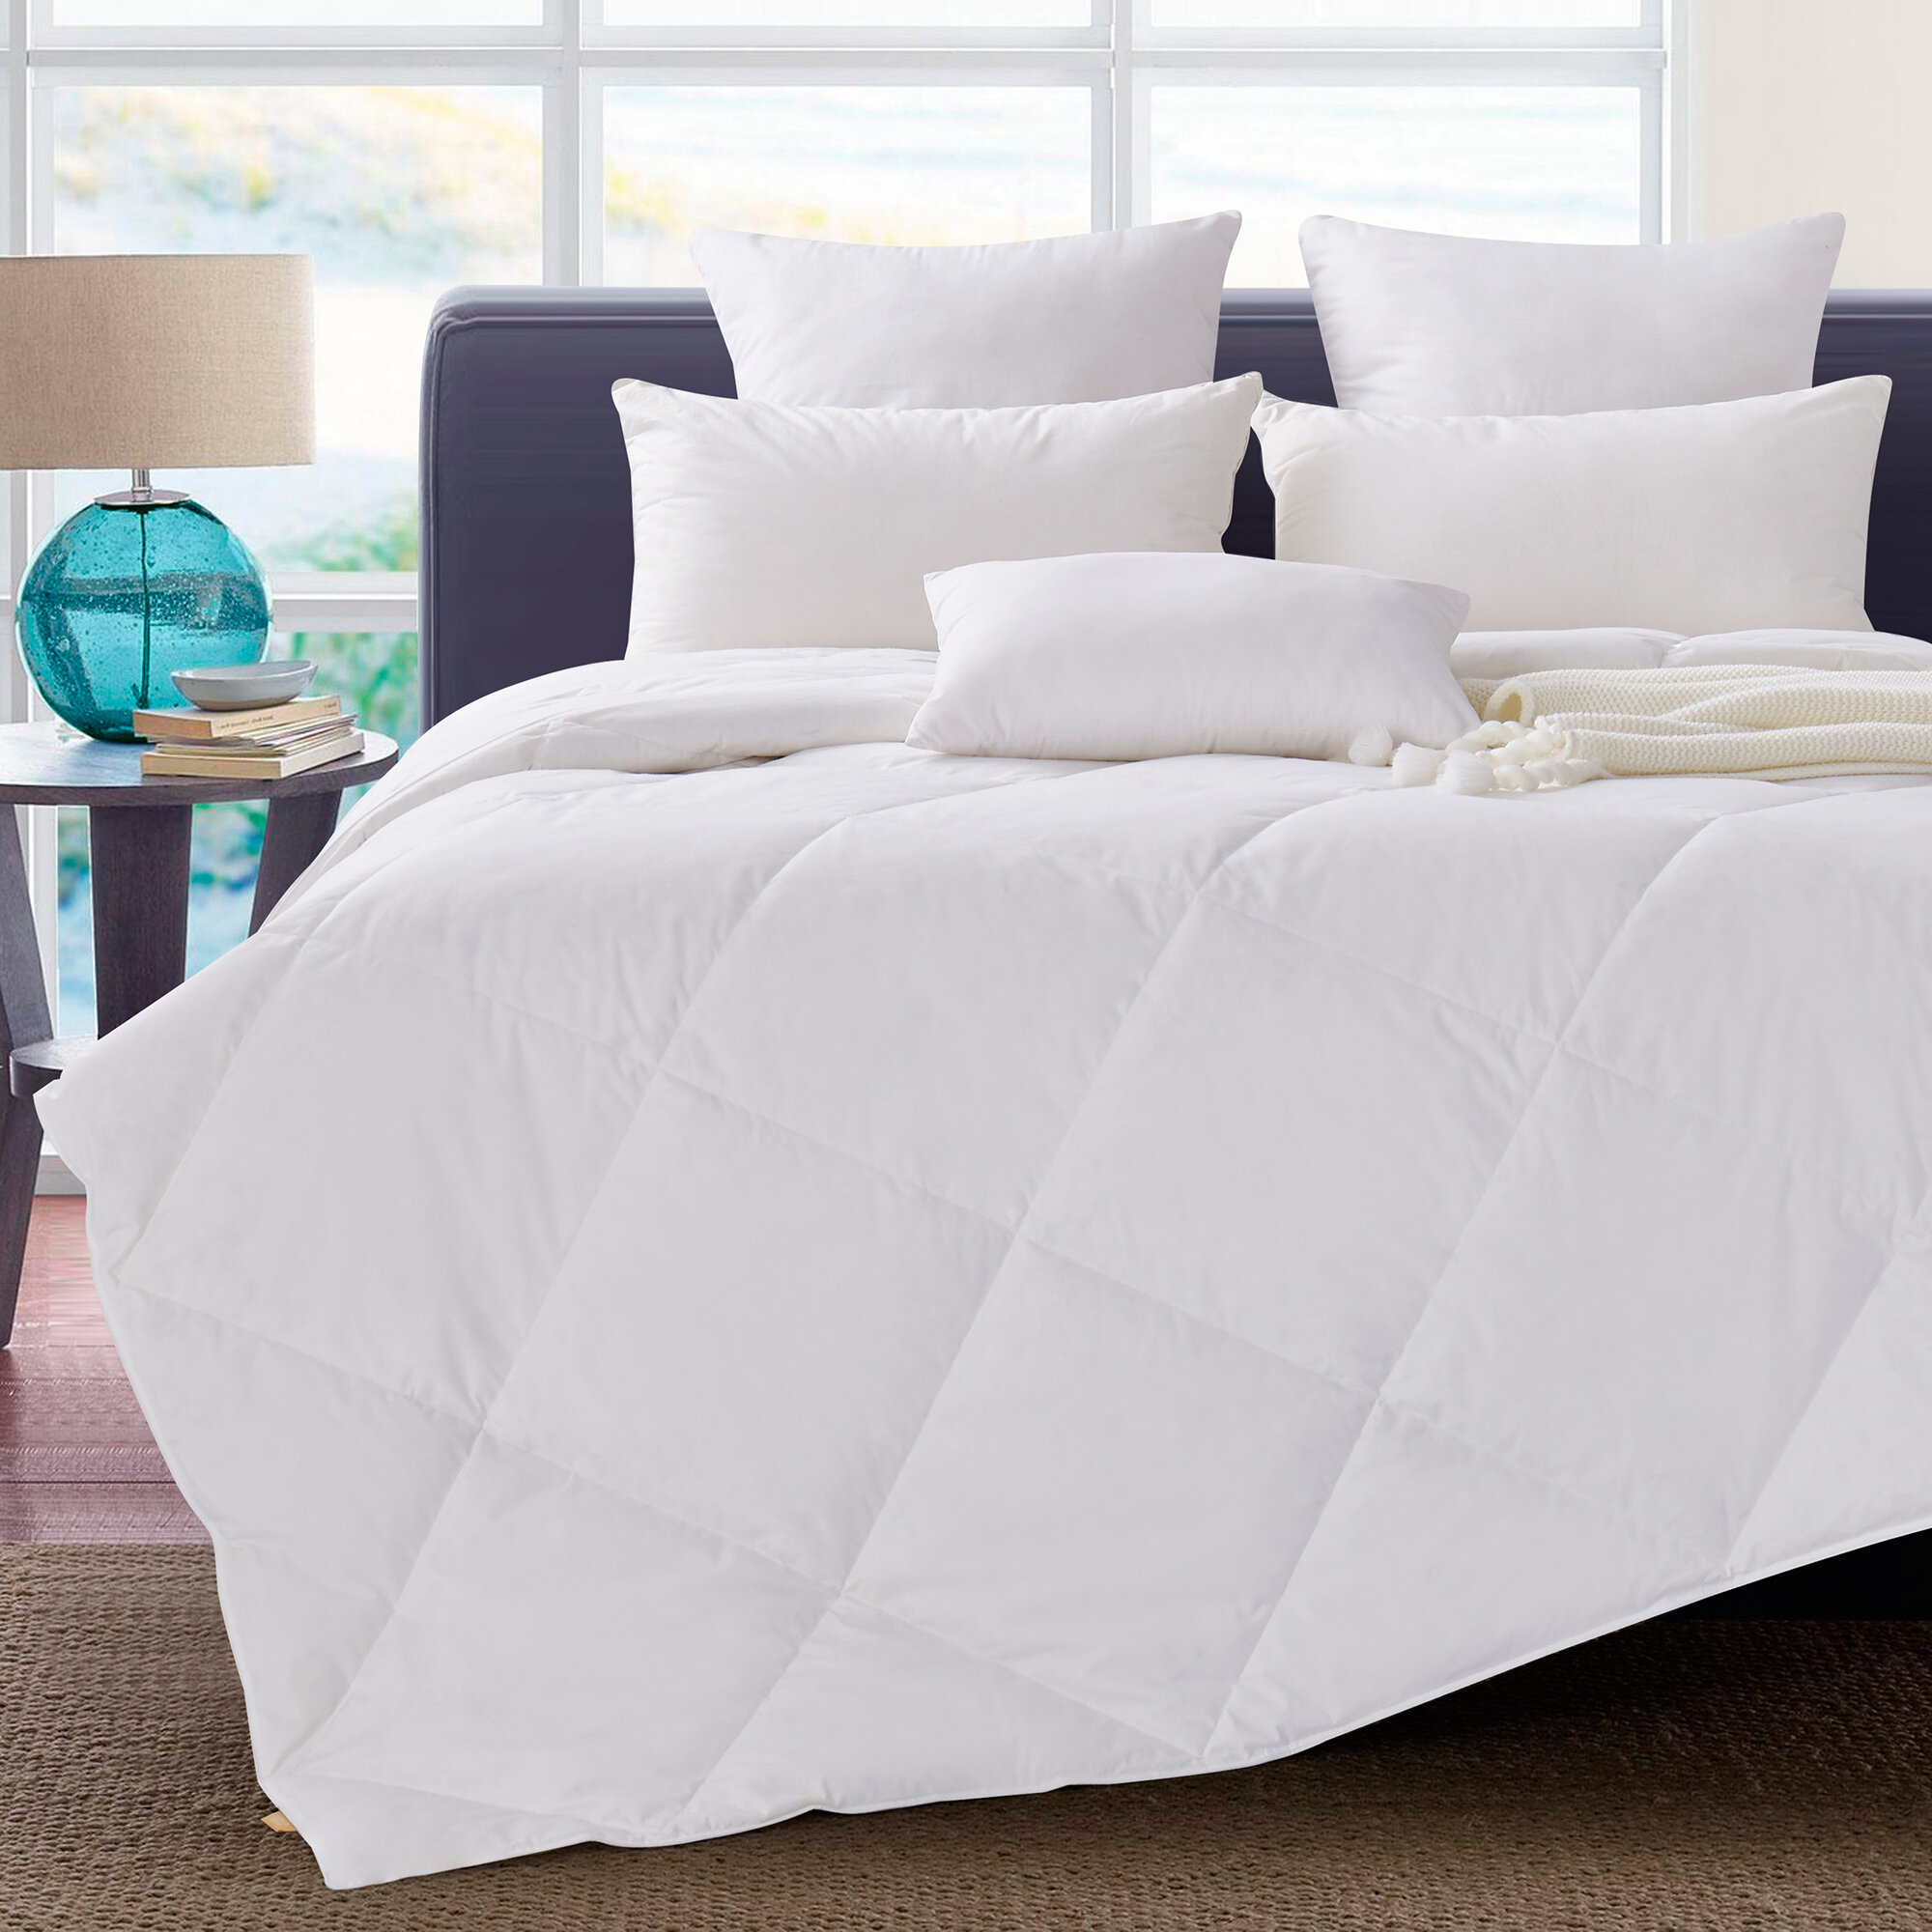 Cozy Beddings Full/Queen Down Alternative Comforter/Duvet Cover Insert White CB1149-Q Box Stitching Design Bed Cover 